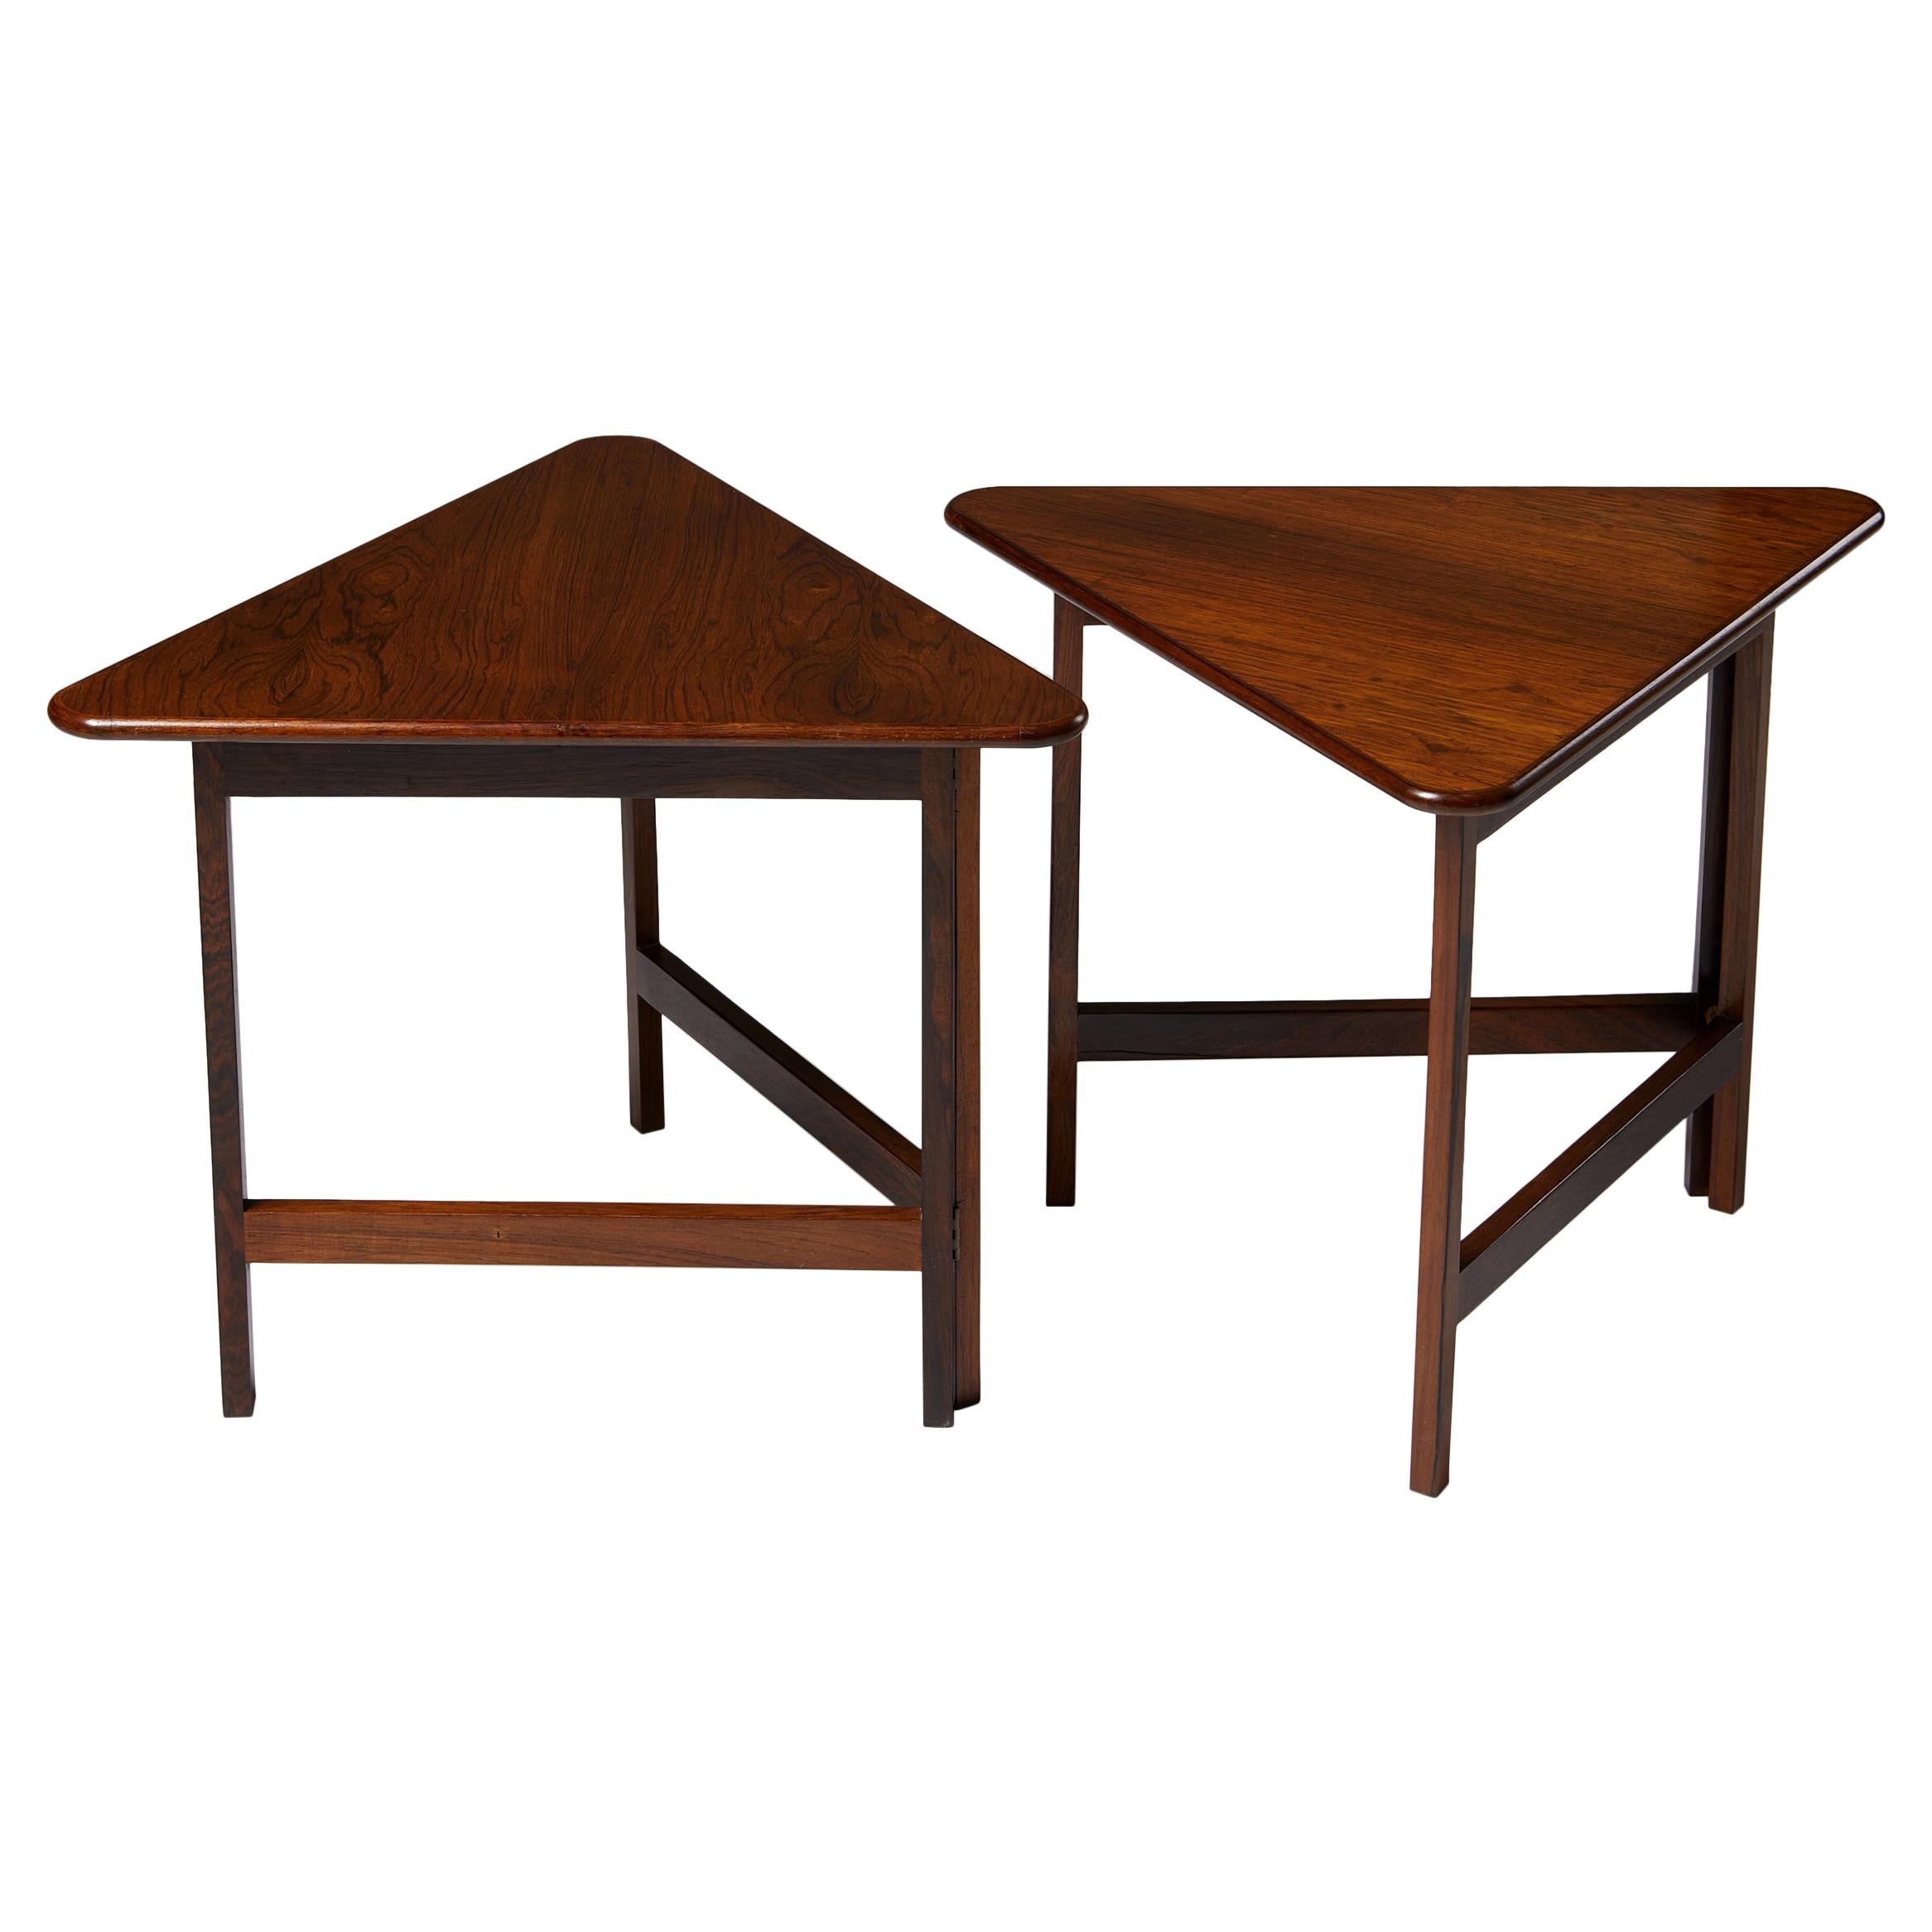 Pair of Foldable Side Tables Designed by Illum Wikkelsø for CFC Silkeborg